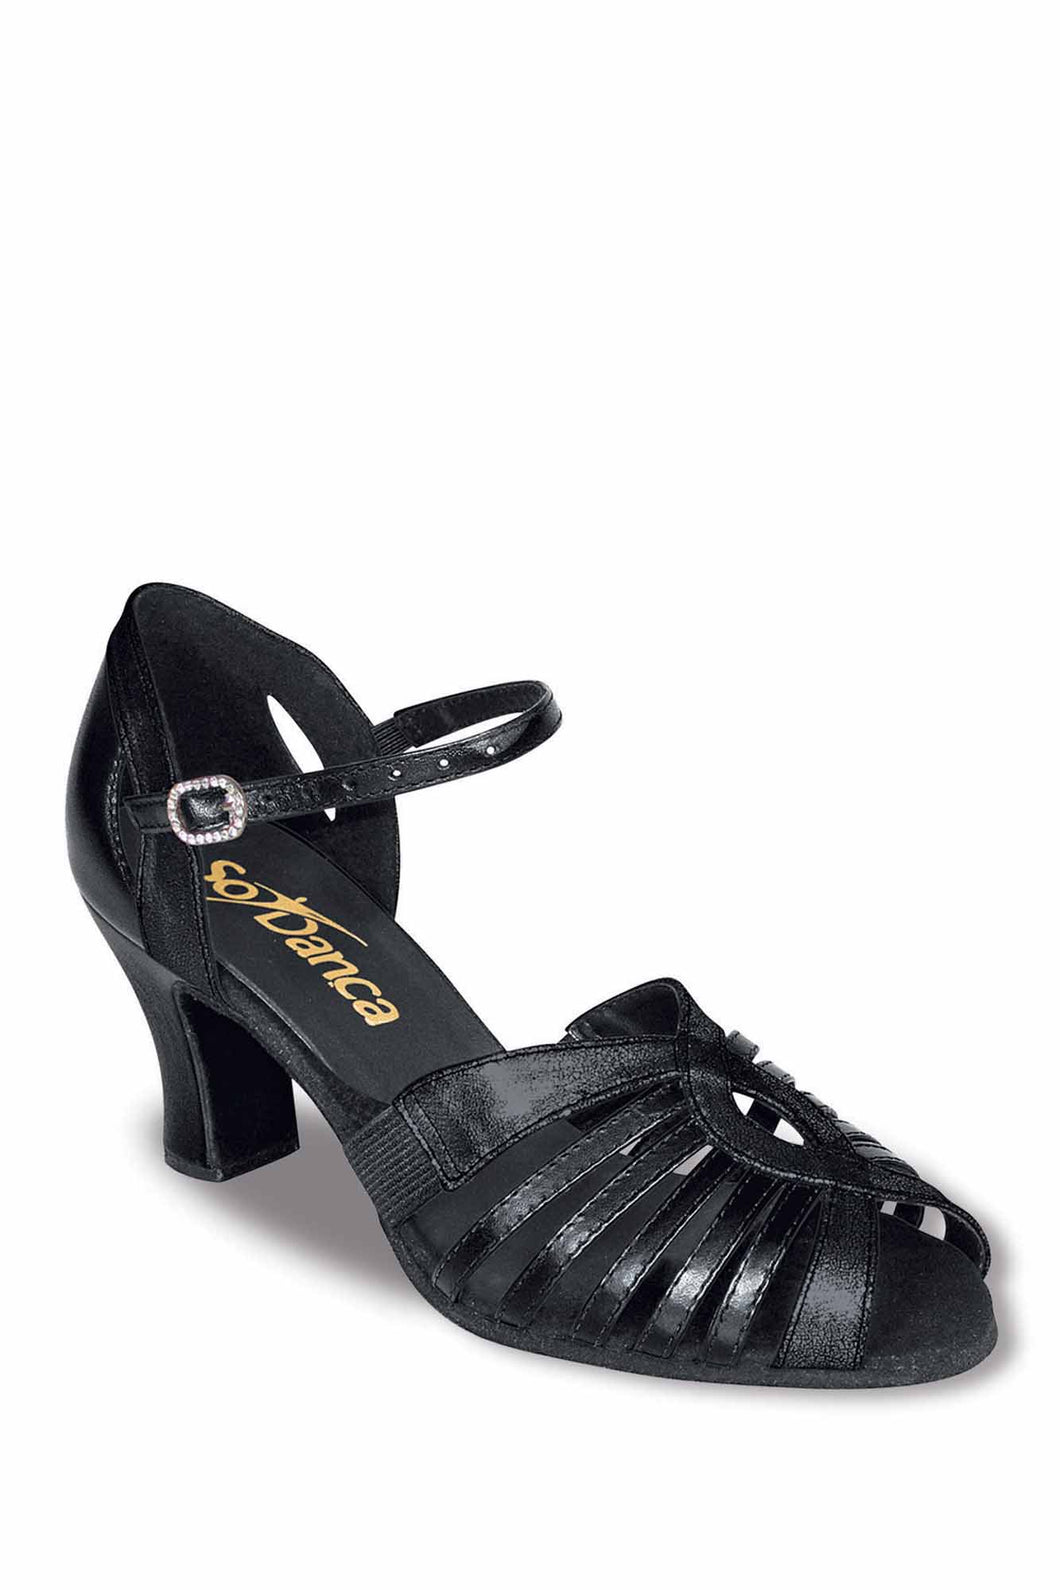 BL30 - Ballroom Shoe